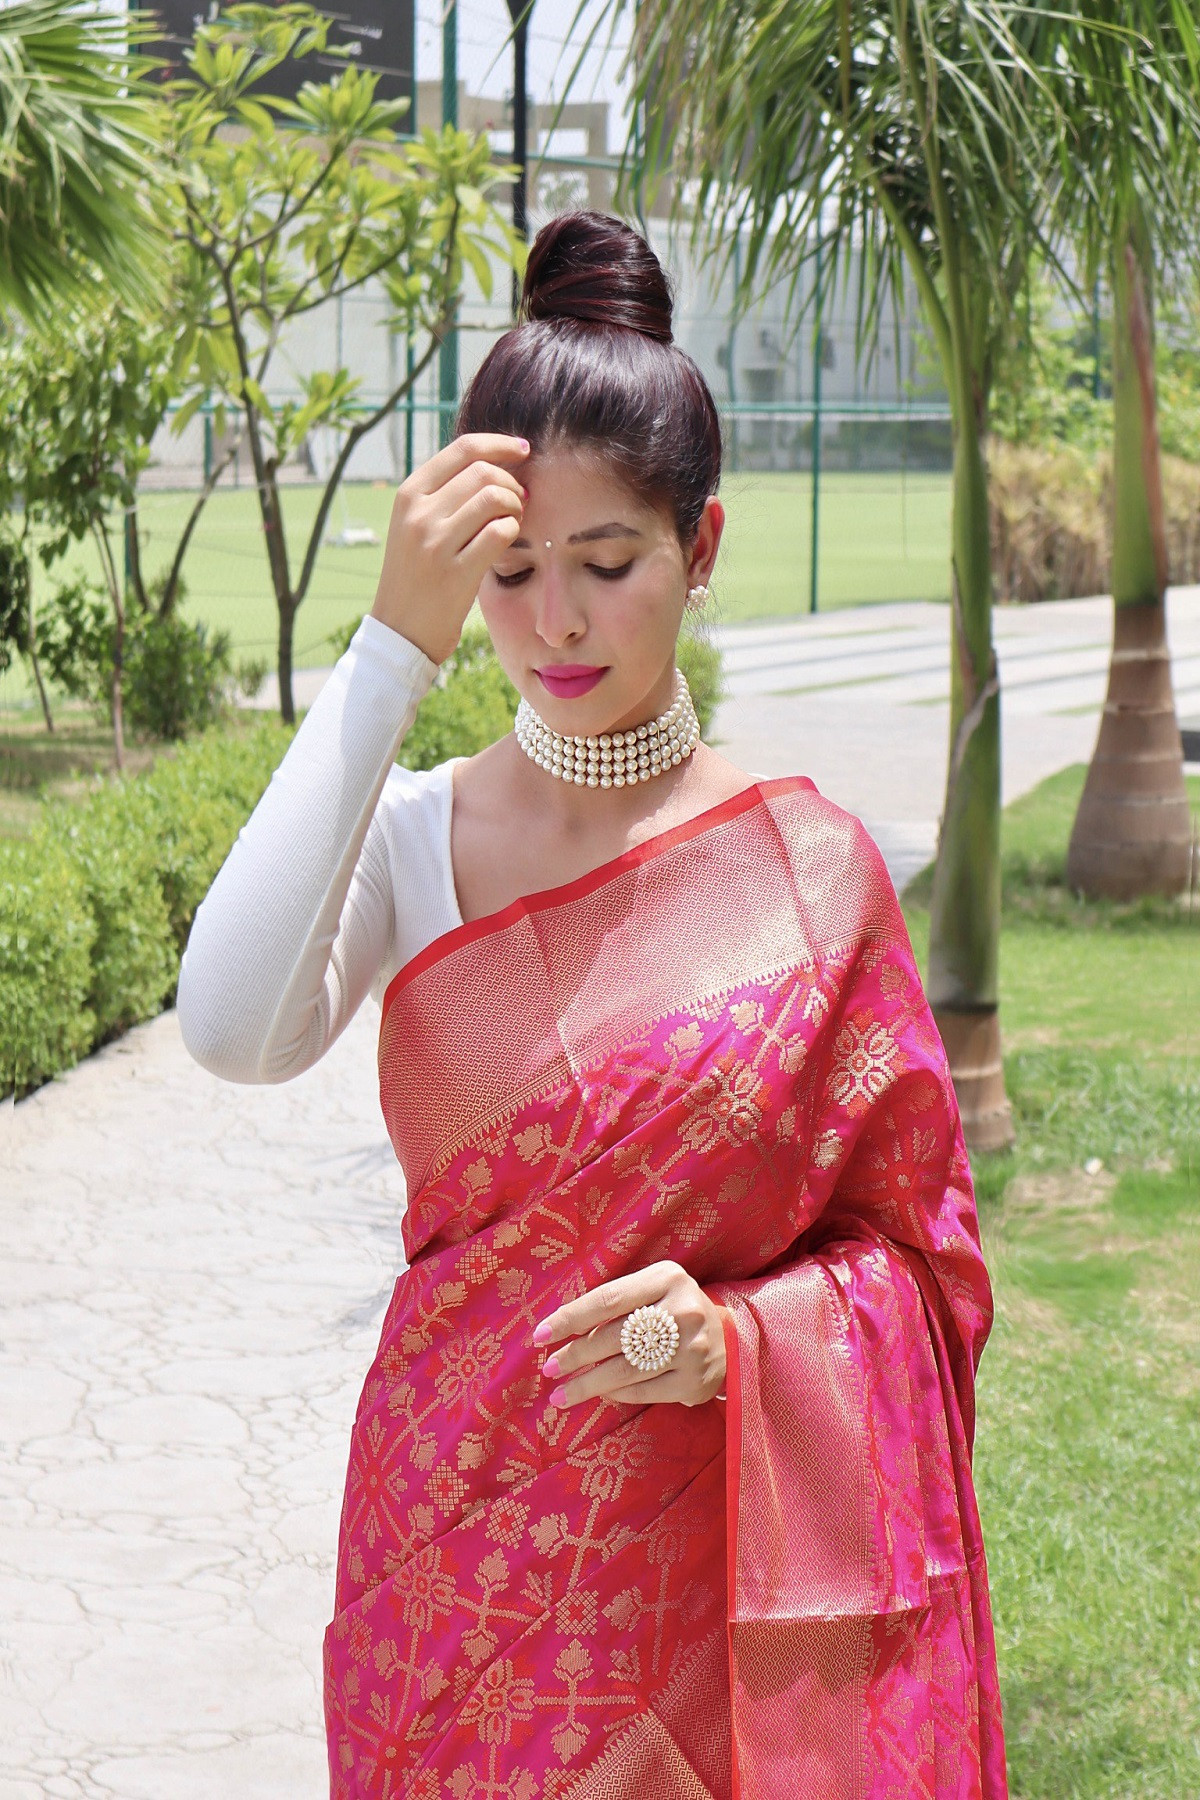 Patola Silk saree with gold Zari meenakari weaves border &Pallu - Pink